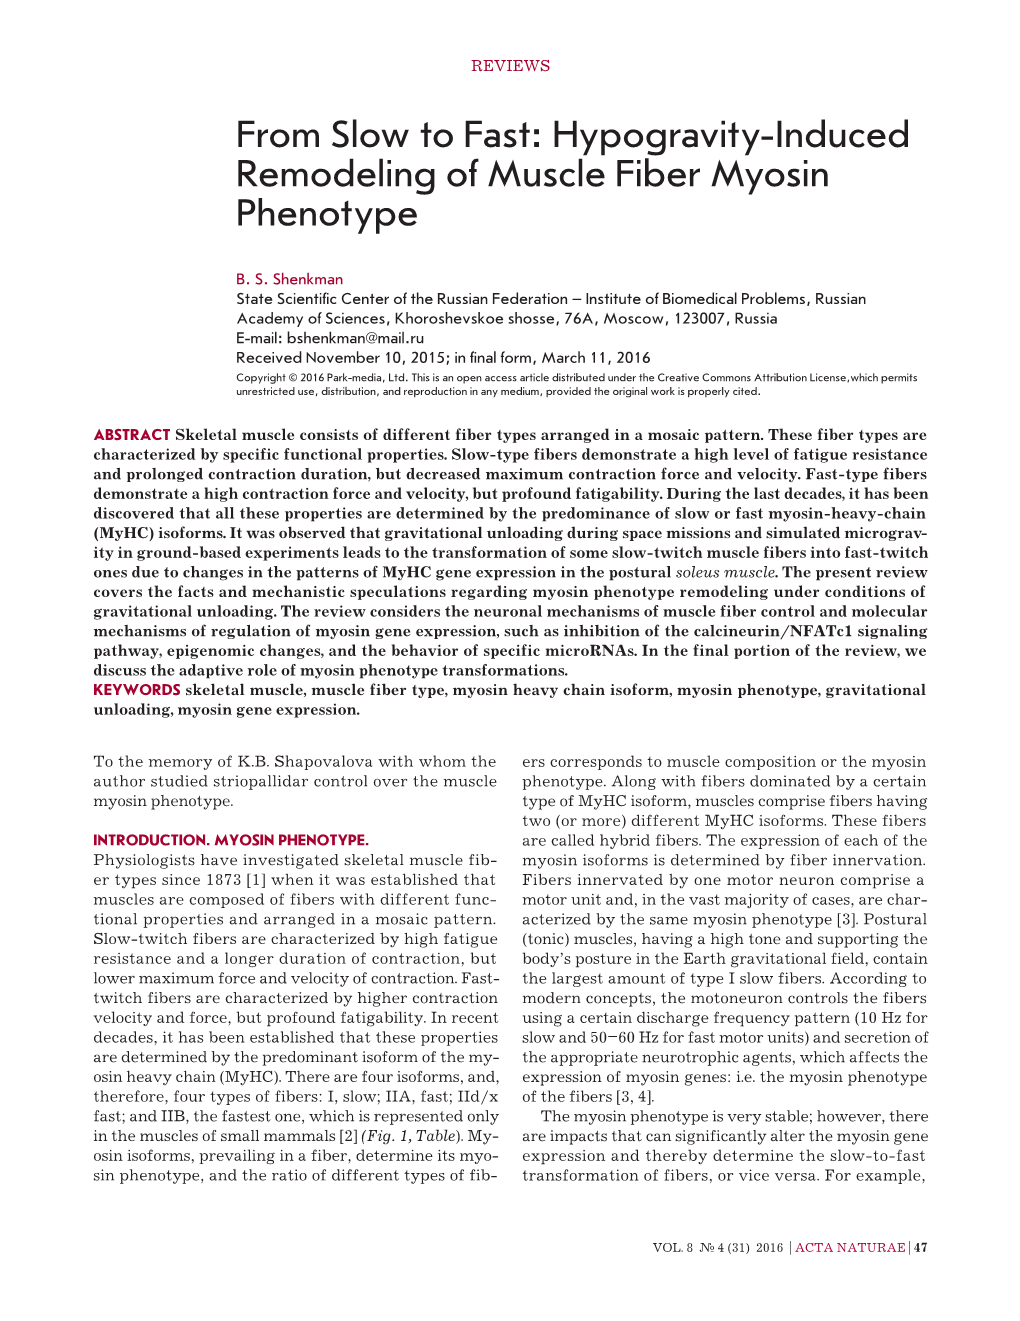 Hypogravity-Induced Remodeling of Muscle Fiber Myosin Phenotype